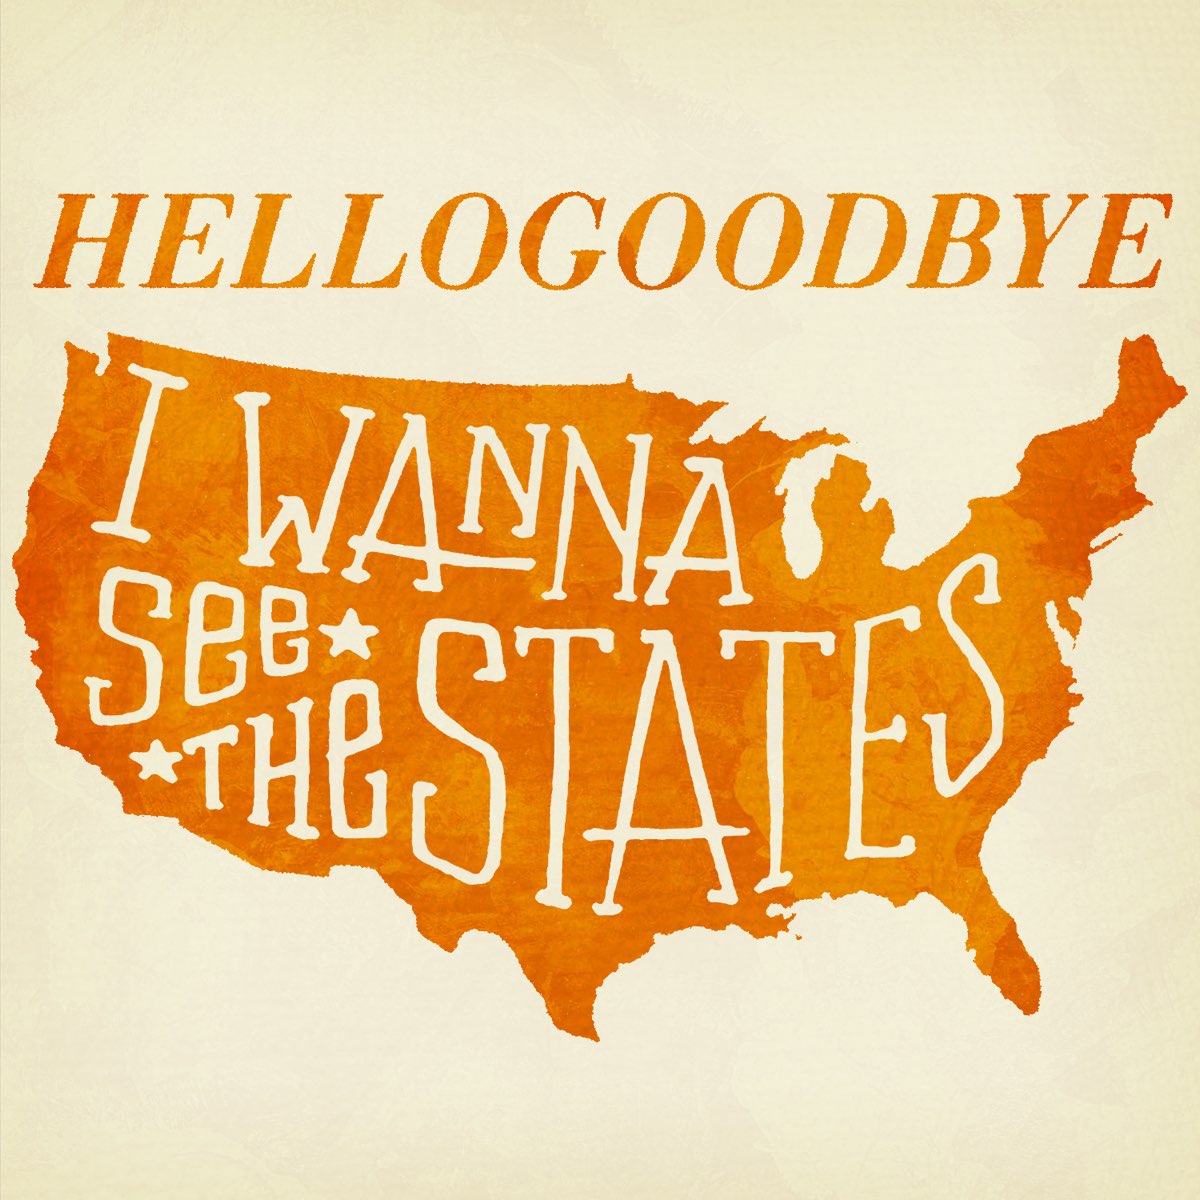 Here Hellogoodbye. Single state